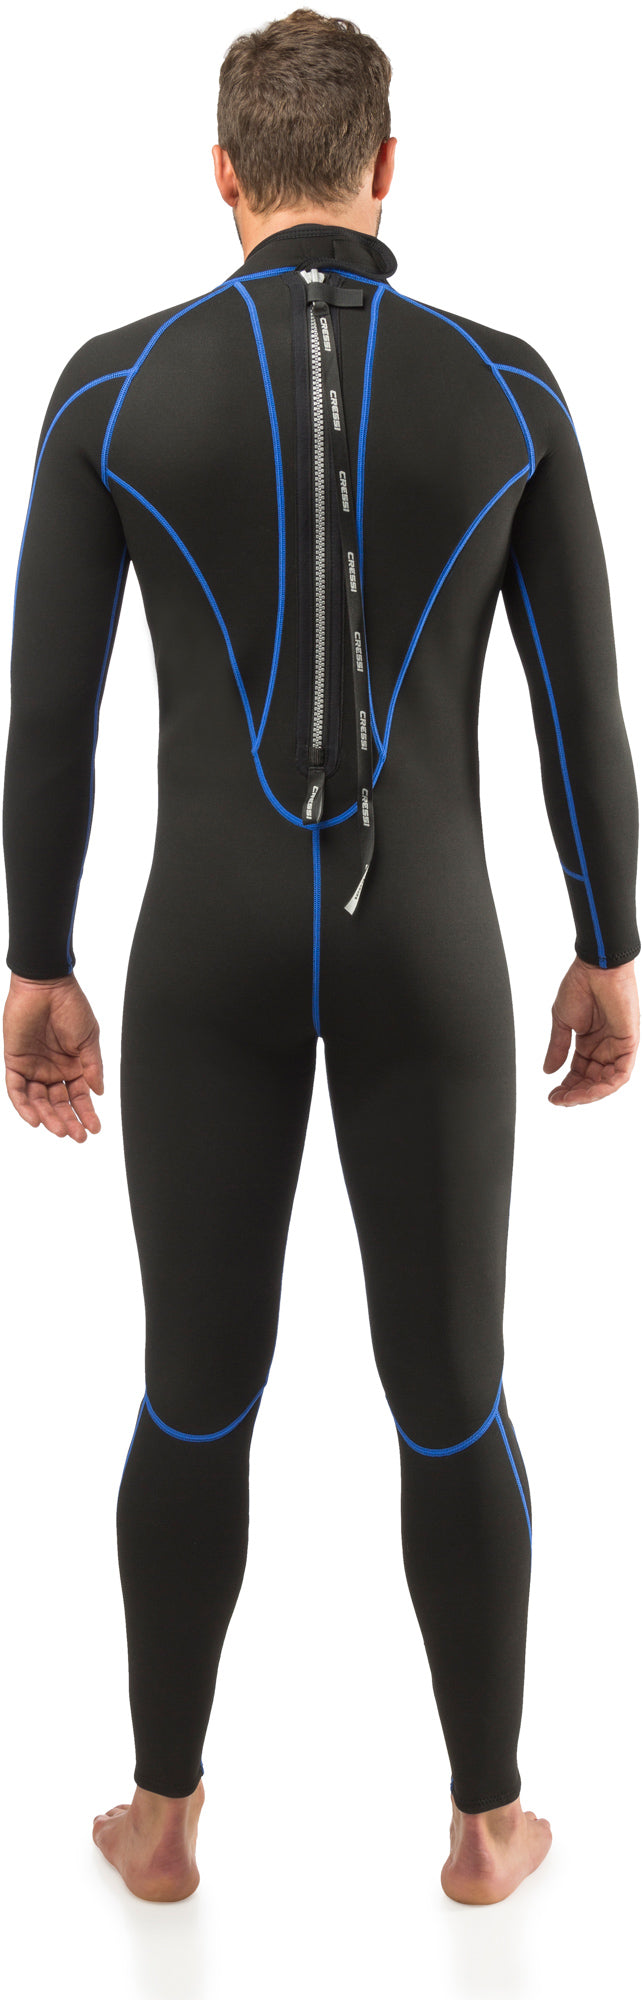 Cressi Full Diving Snorkeling Men's Wetsuit 2.5mm in Premium High Stretch Neoprene - Maya